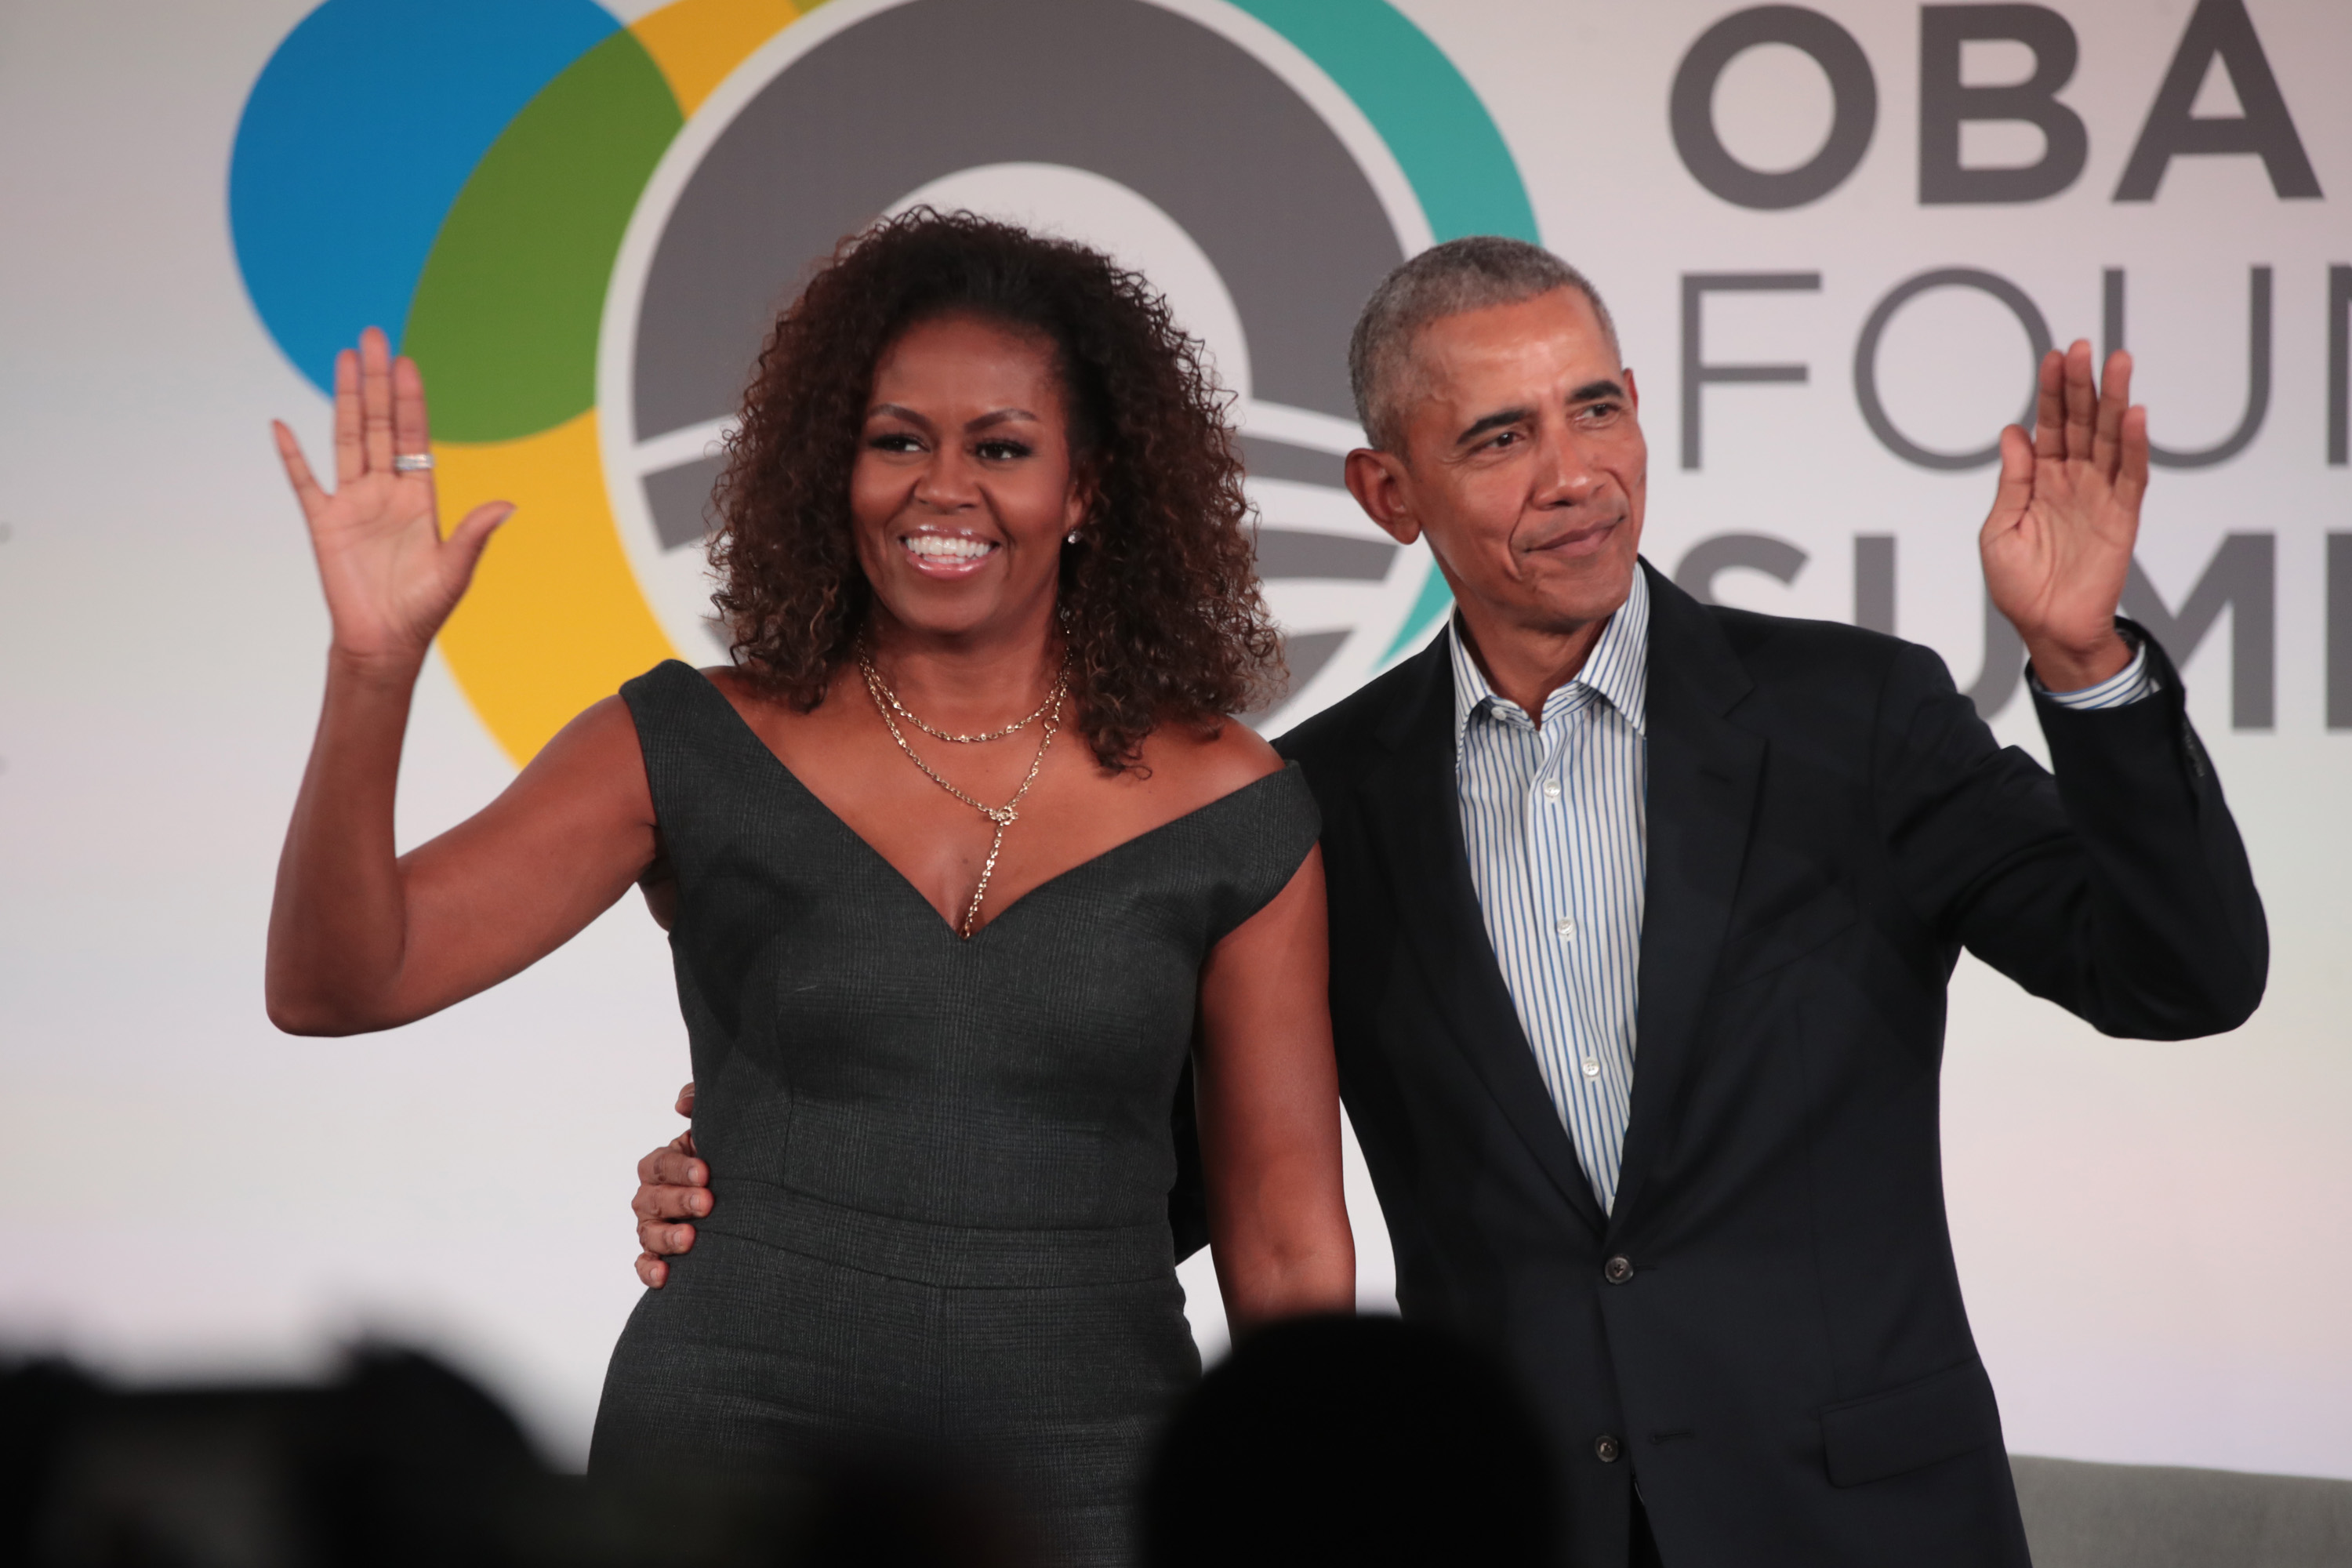 Obama Foundation announces inaugural class of Leaders USA program